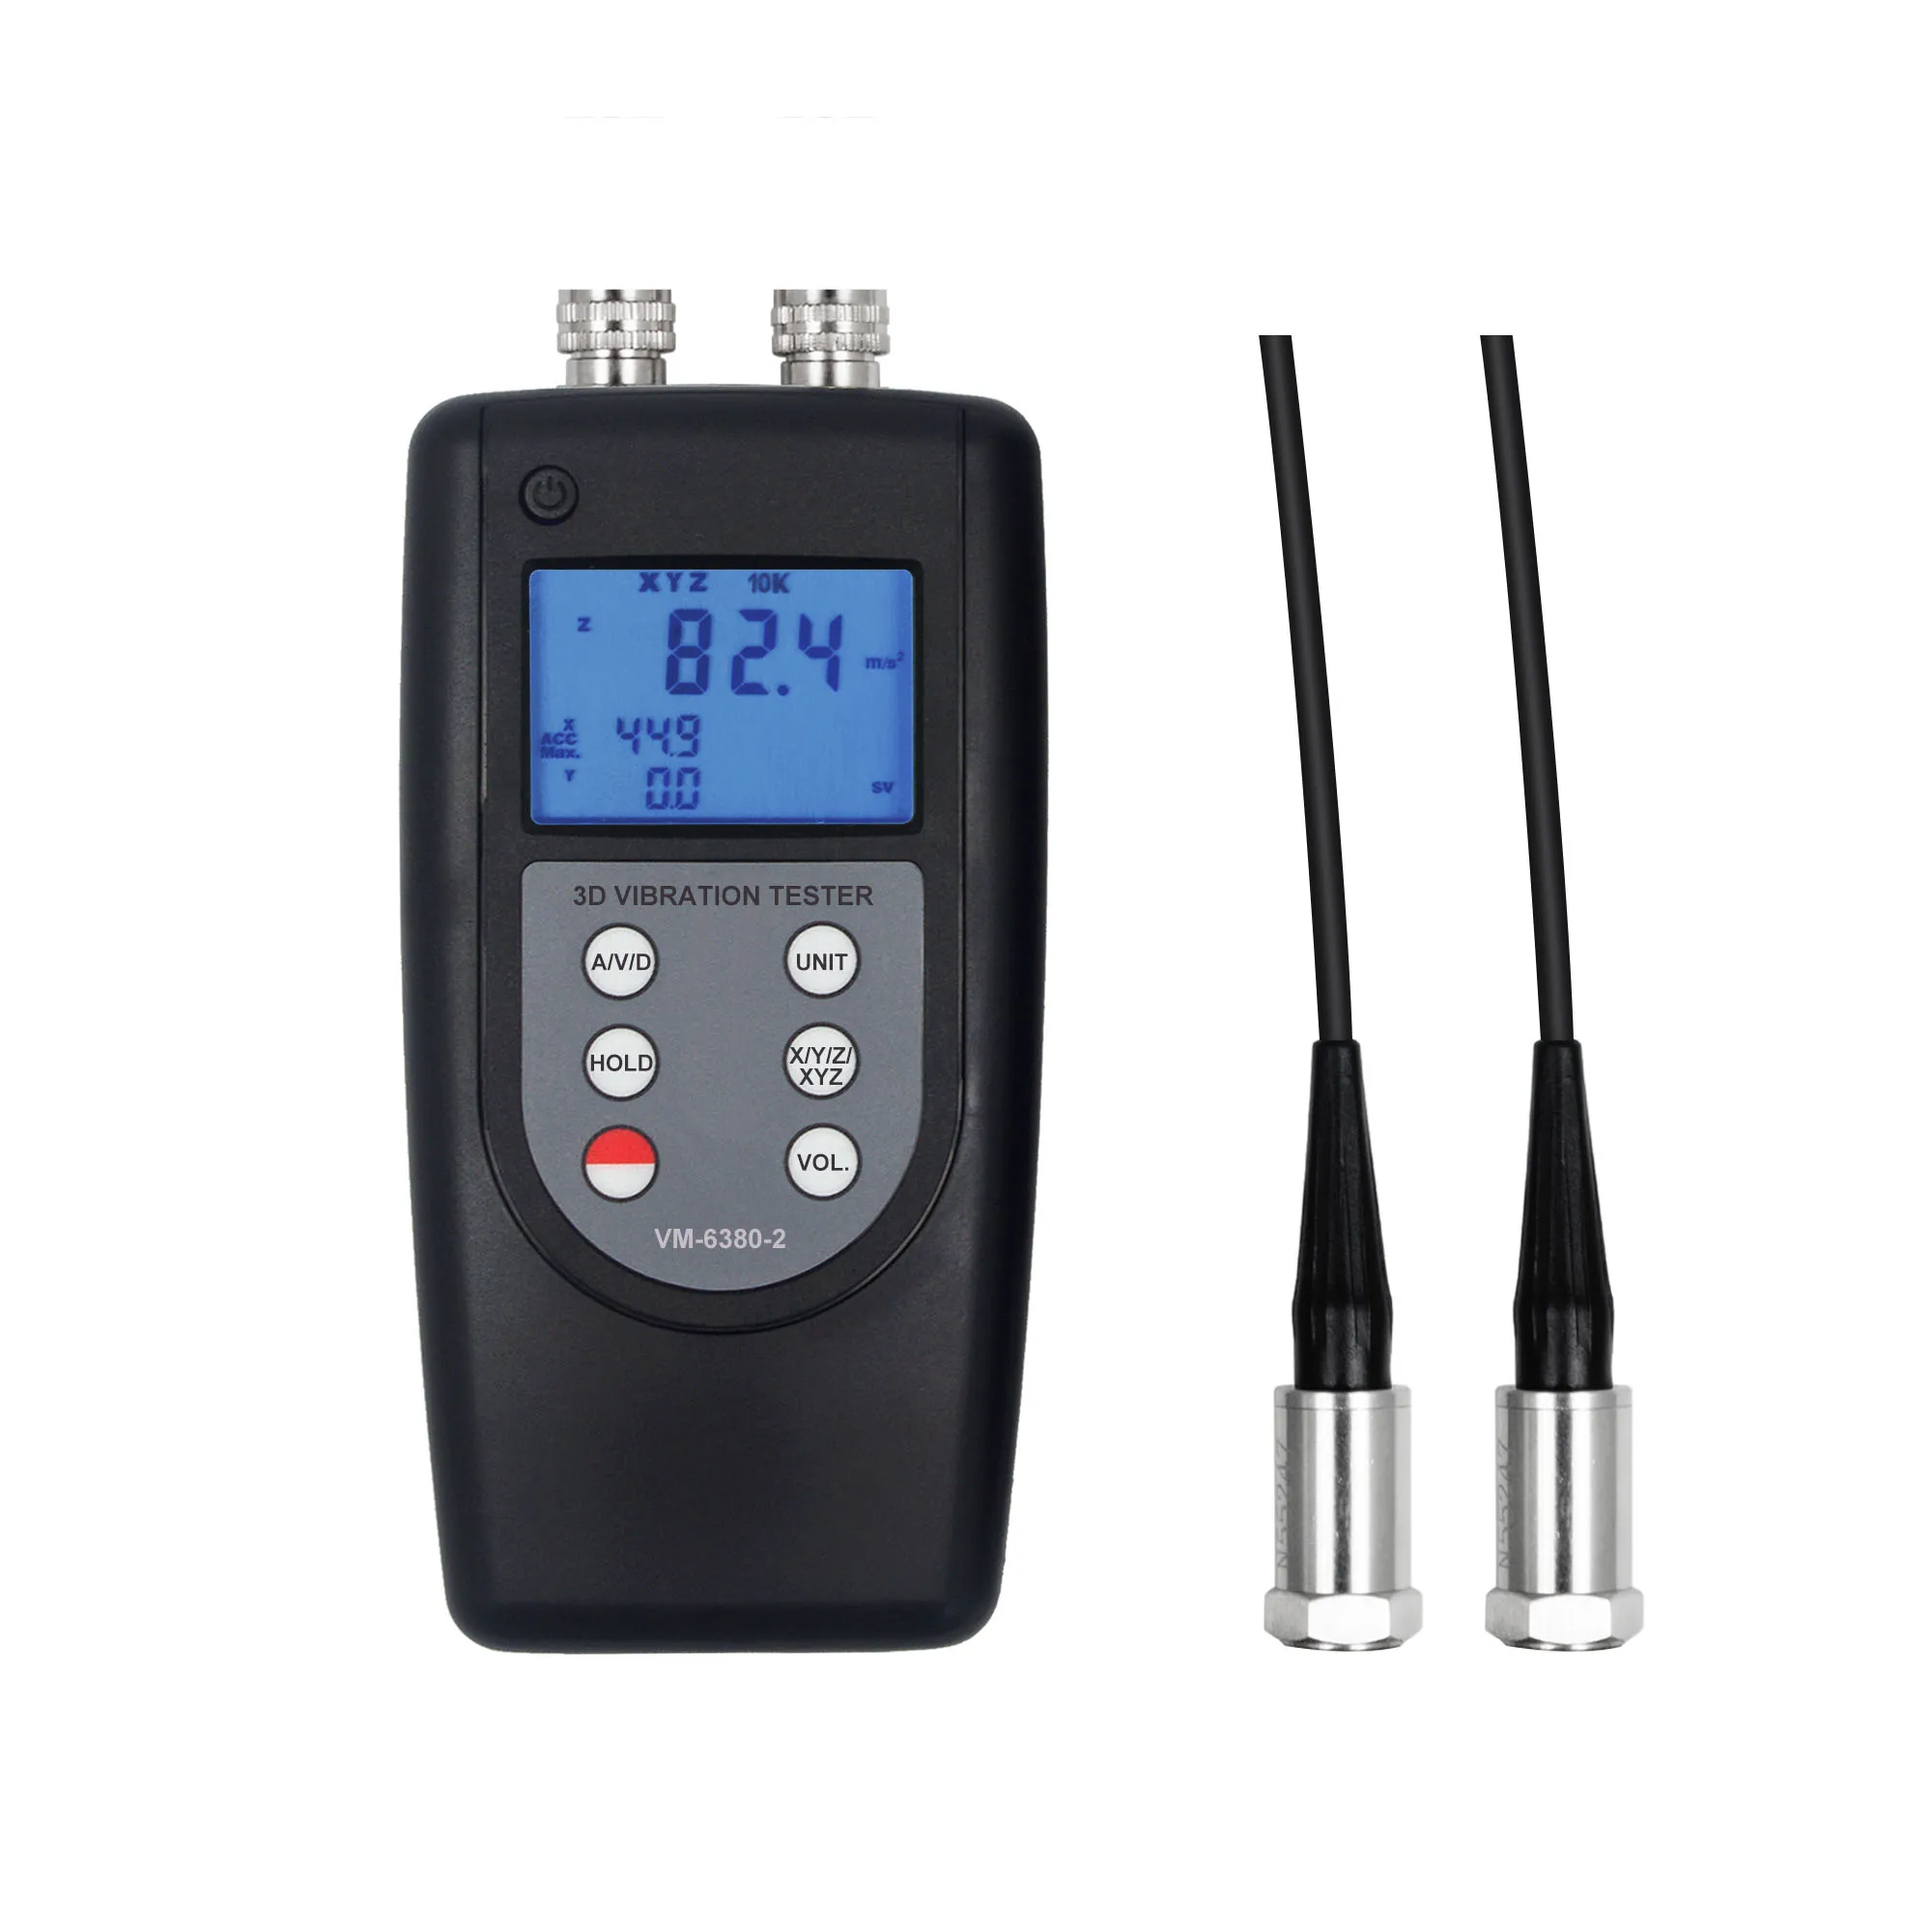 3D-vibratiemeter Tester Digitale vibrater VM-6380-2 met 2 piëzo-elektrische transducers